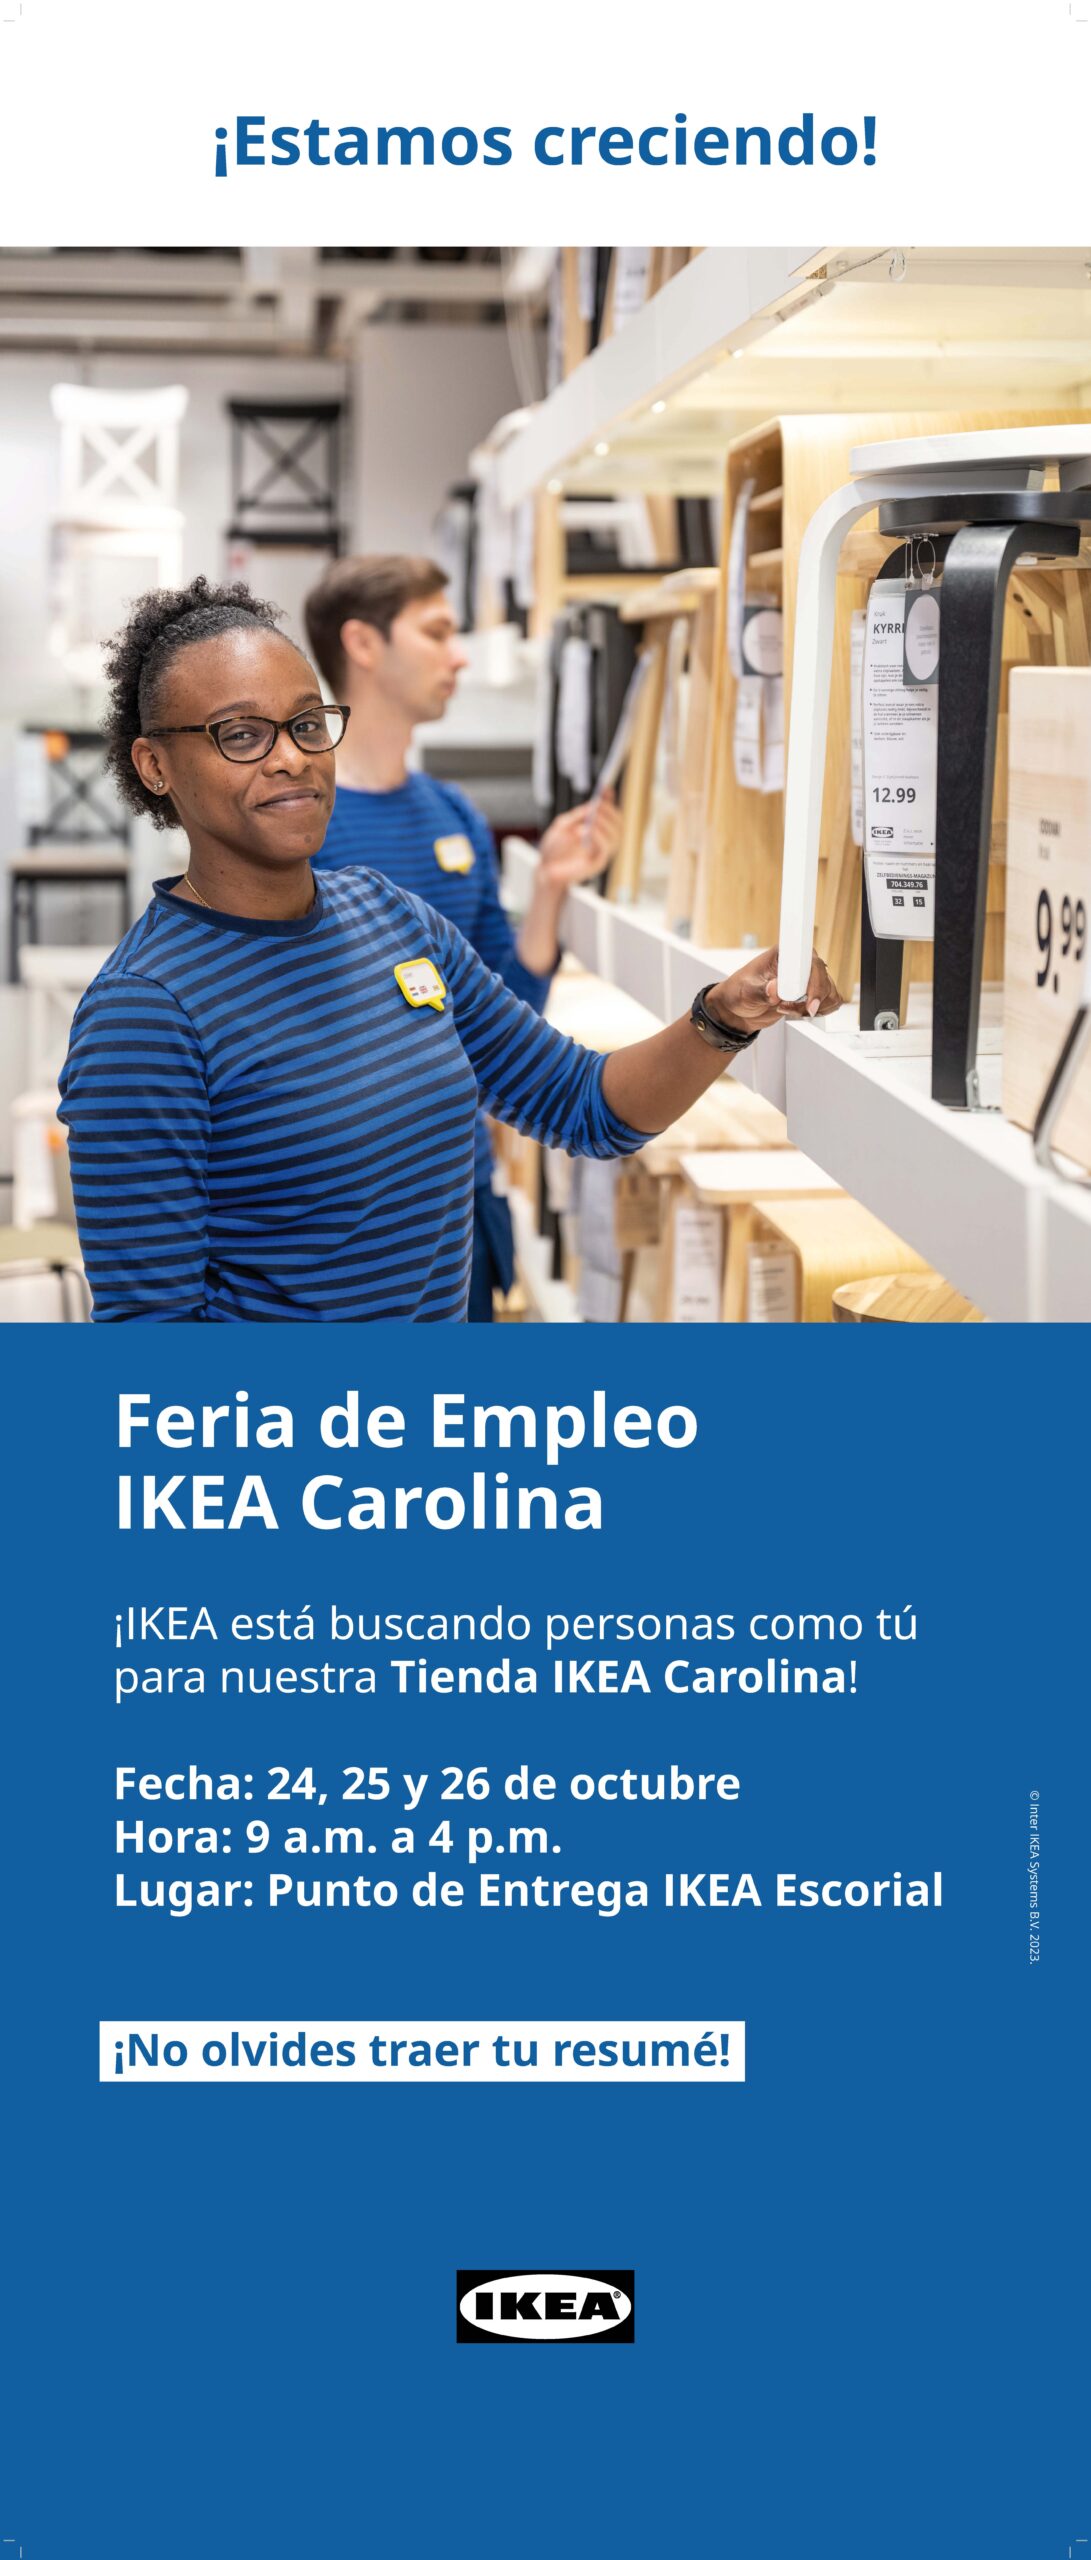 Feria de Empleo IKEA Carolina